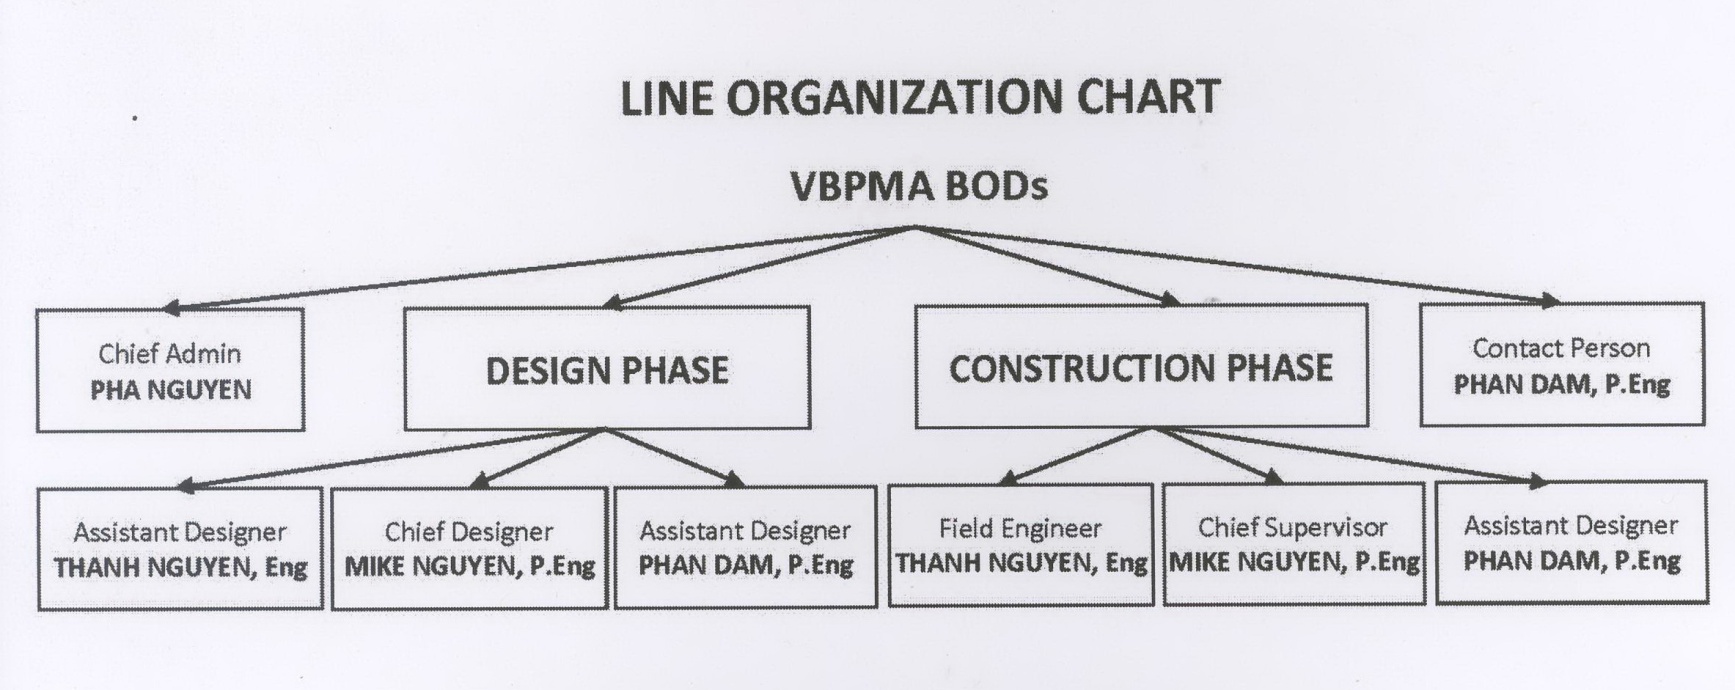 VBPMA - LINE ORGANIZATION - CRPPED- A- Image0053.jpg